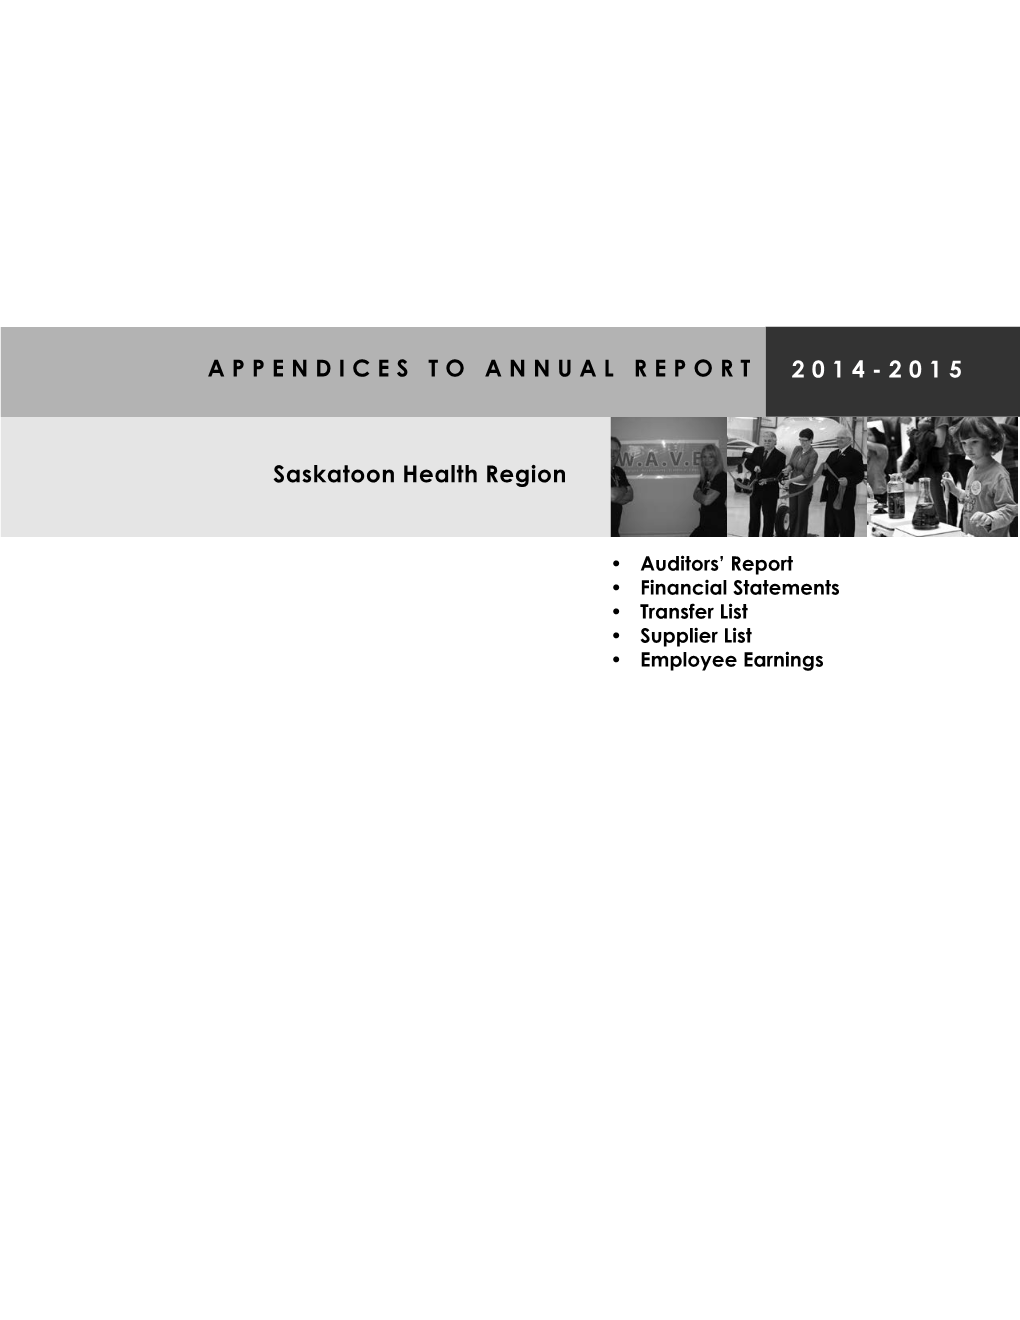 Appendices to the Saskatoon Health Region 2014-2015 Annual Report